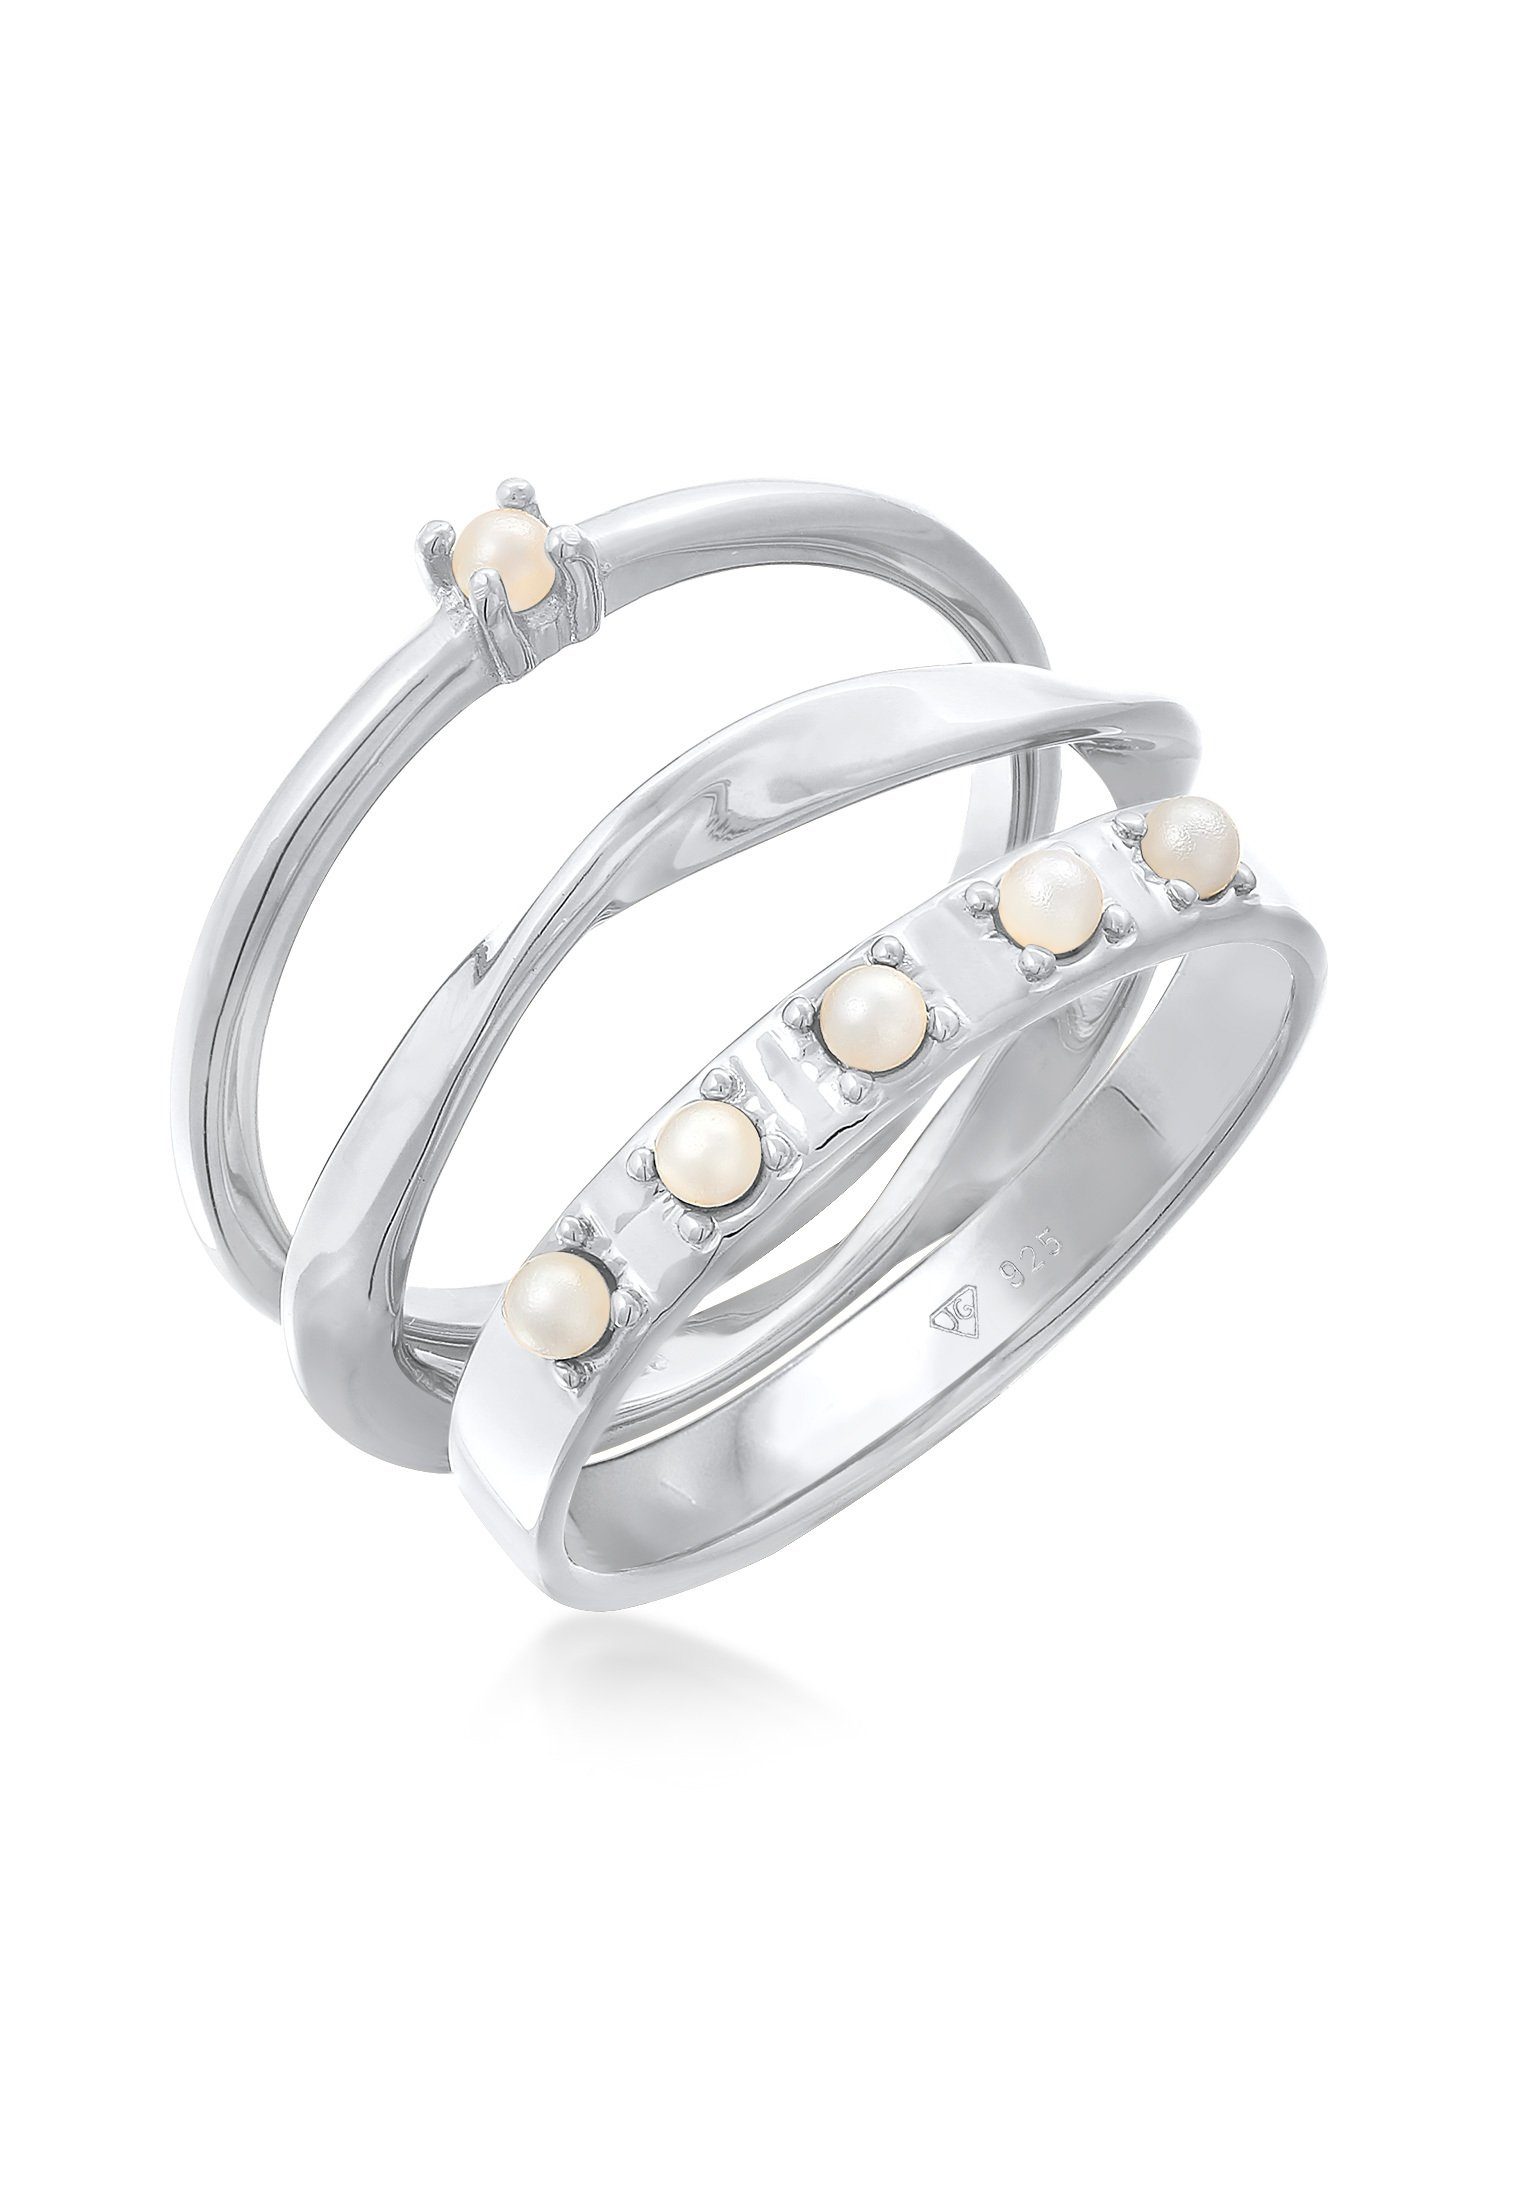 Perlen Look Silber, Elli glamourösen Schmuckstück Perlen Set 925 3er Synthetische Klassik im Stapelring Perlenring